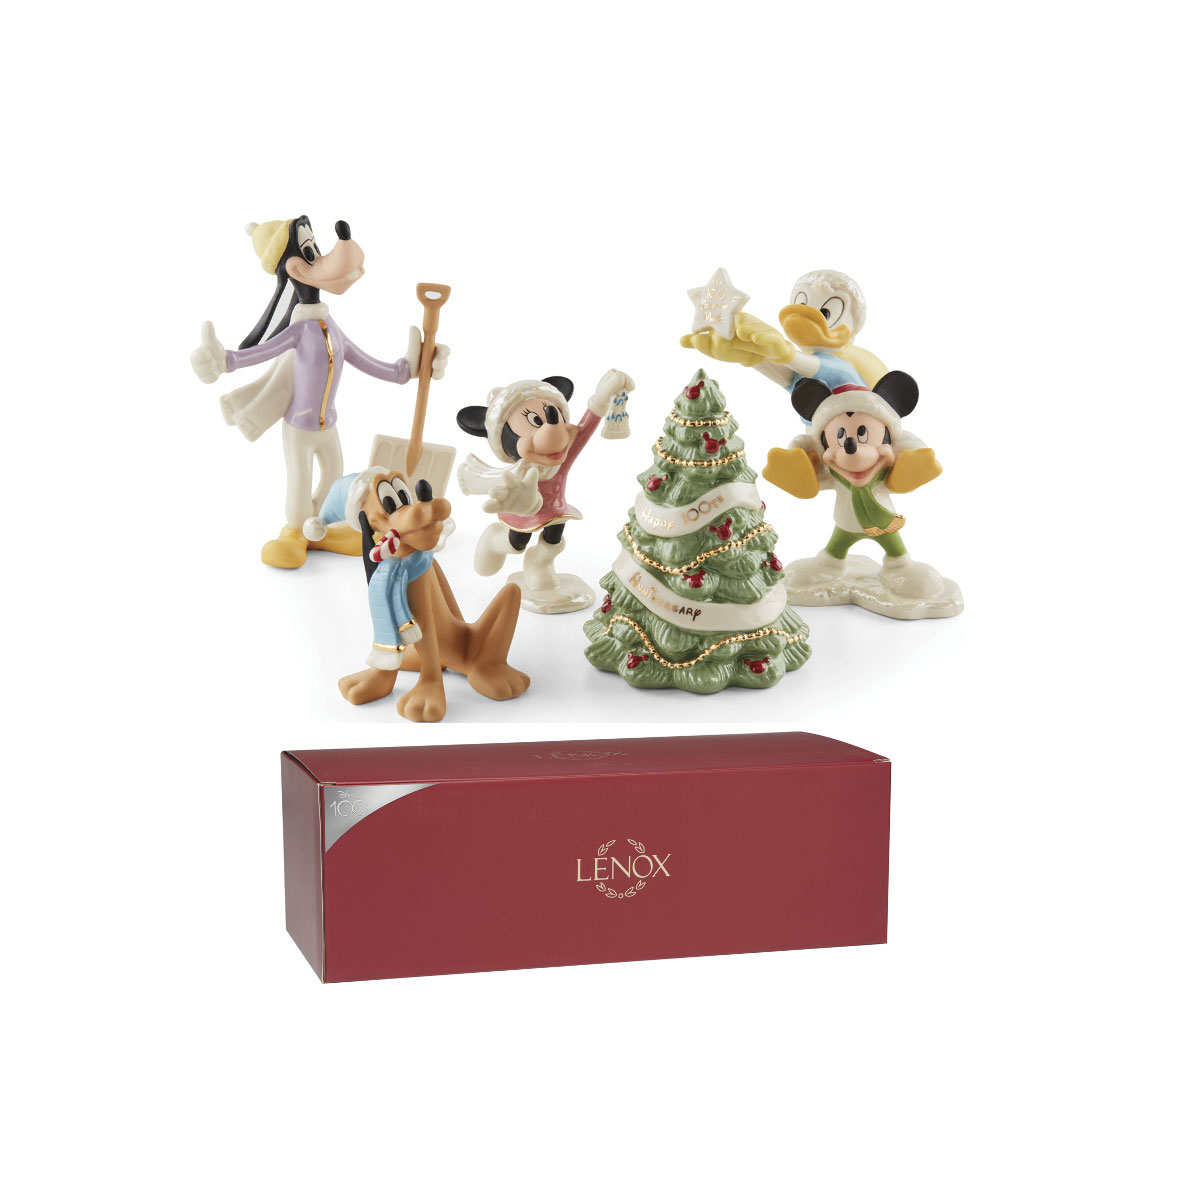 Lenox Disney 100th Anniversary Set of 5